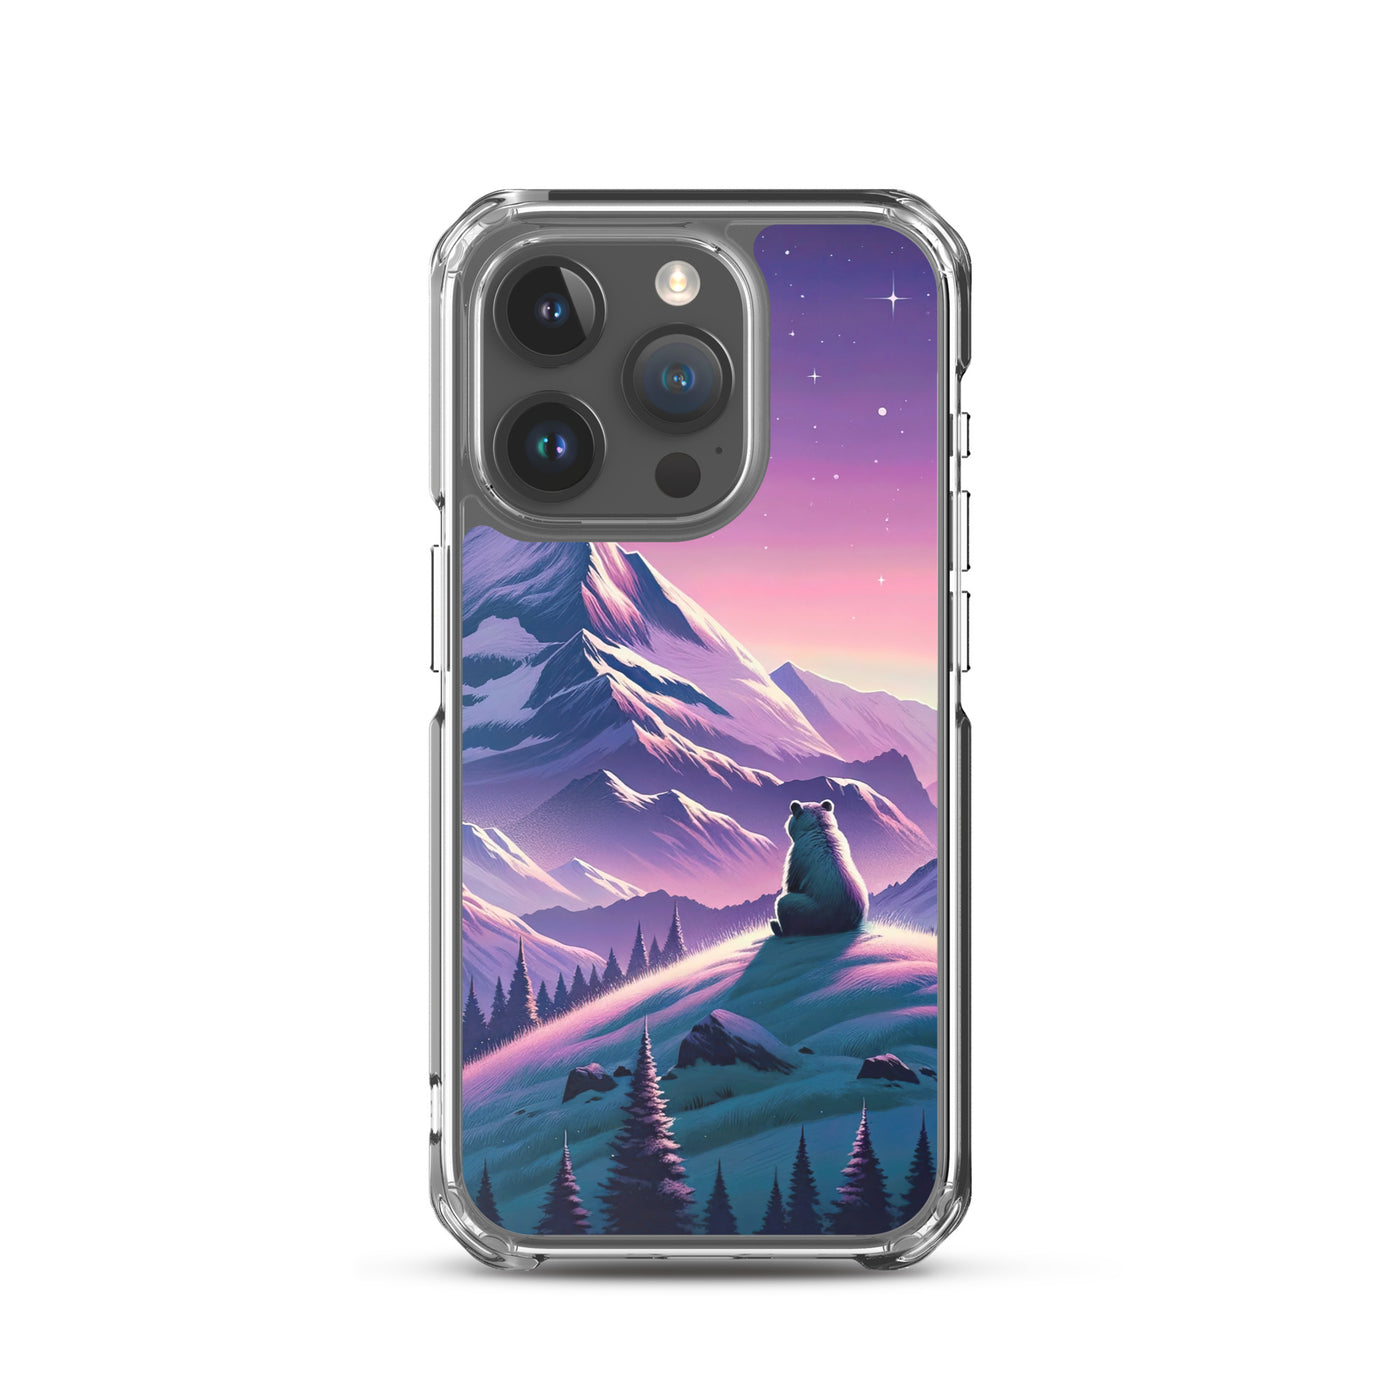 Bezaubernder Alpenabend mit Bär, lavendel-rosafarbener Himmel (AN) - iPhone Schutzhülle (durchsichtig) xxx yyy zzz iPhone 15 Pro